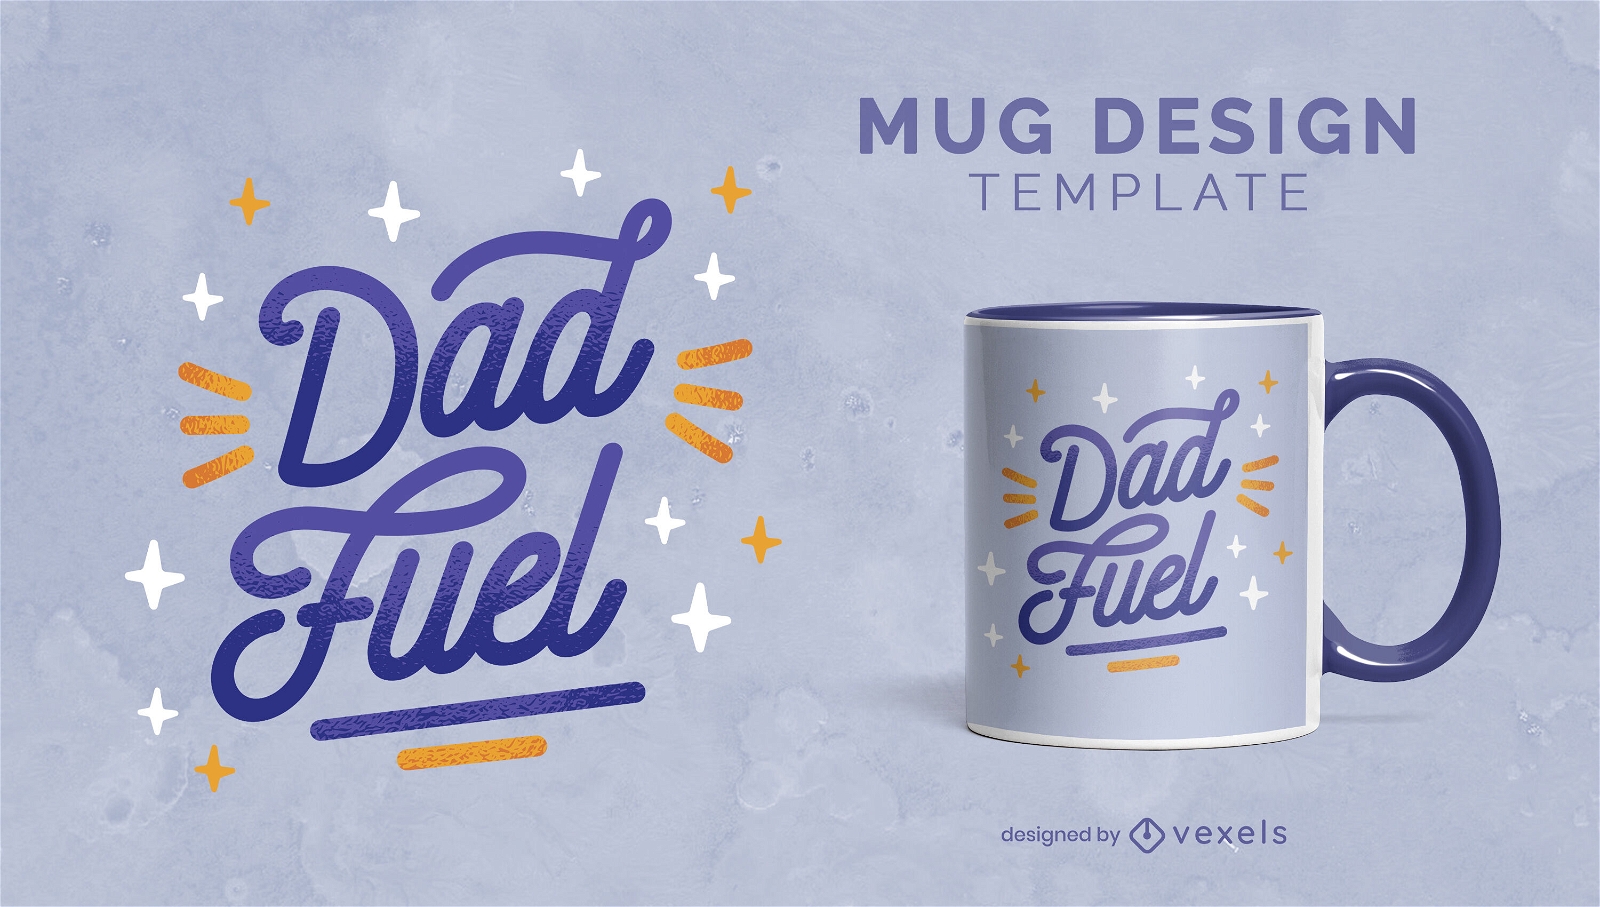 Dad fuel quote mug design